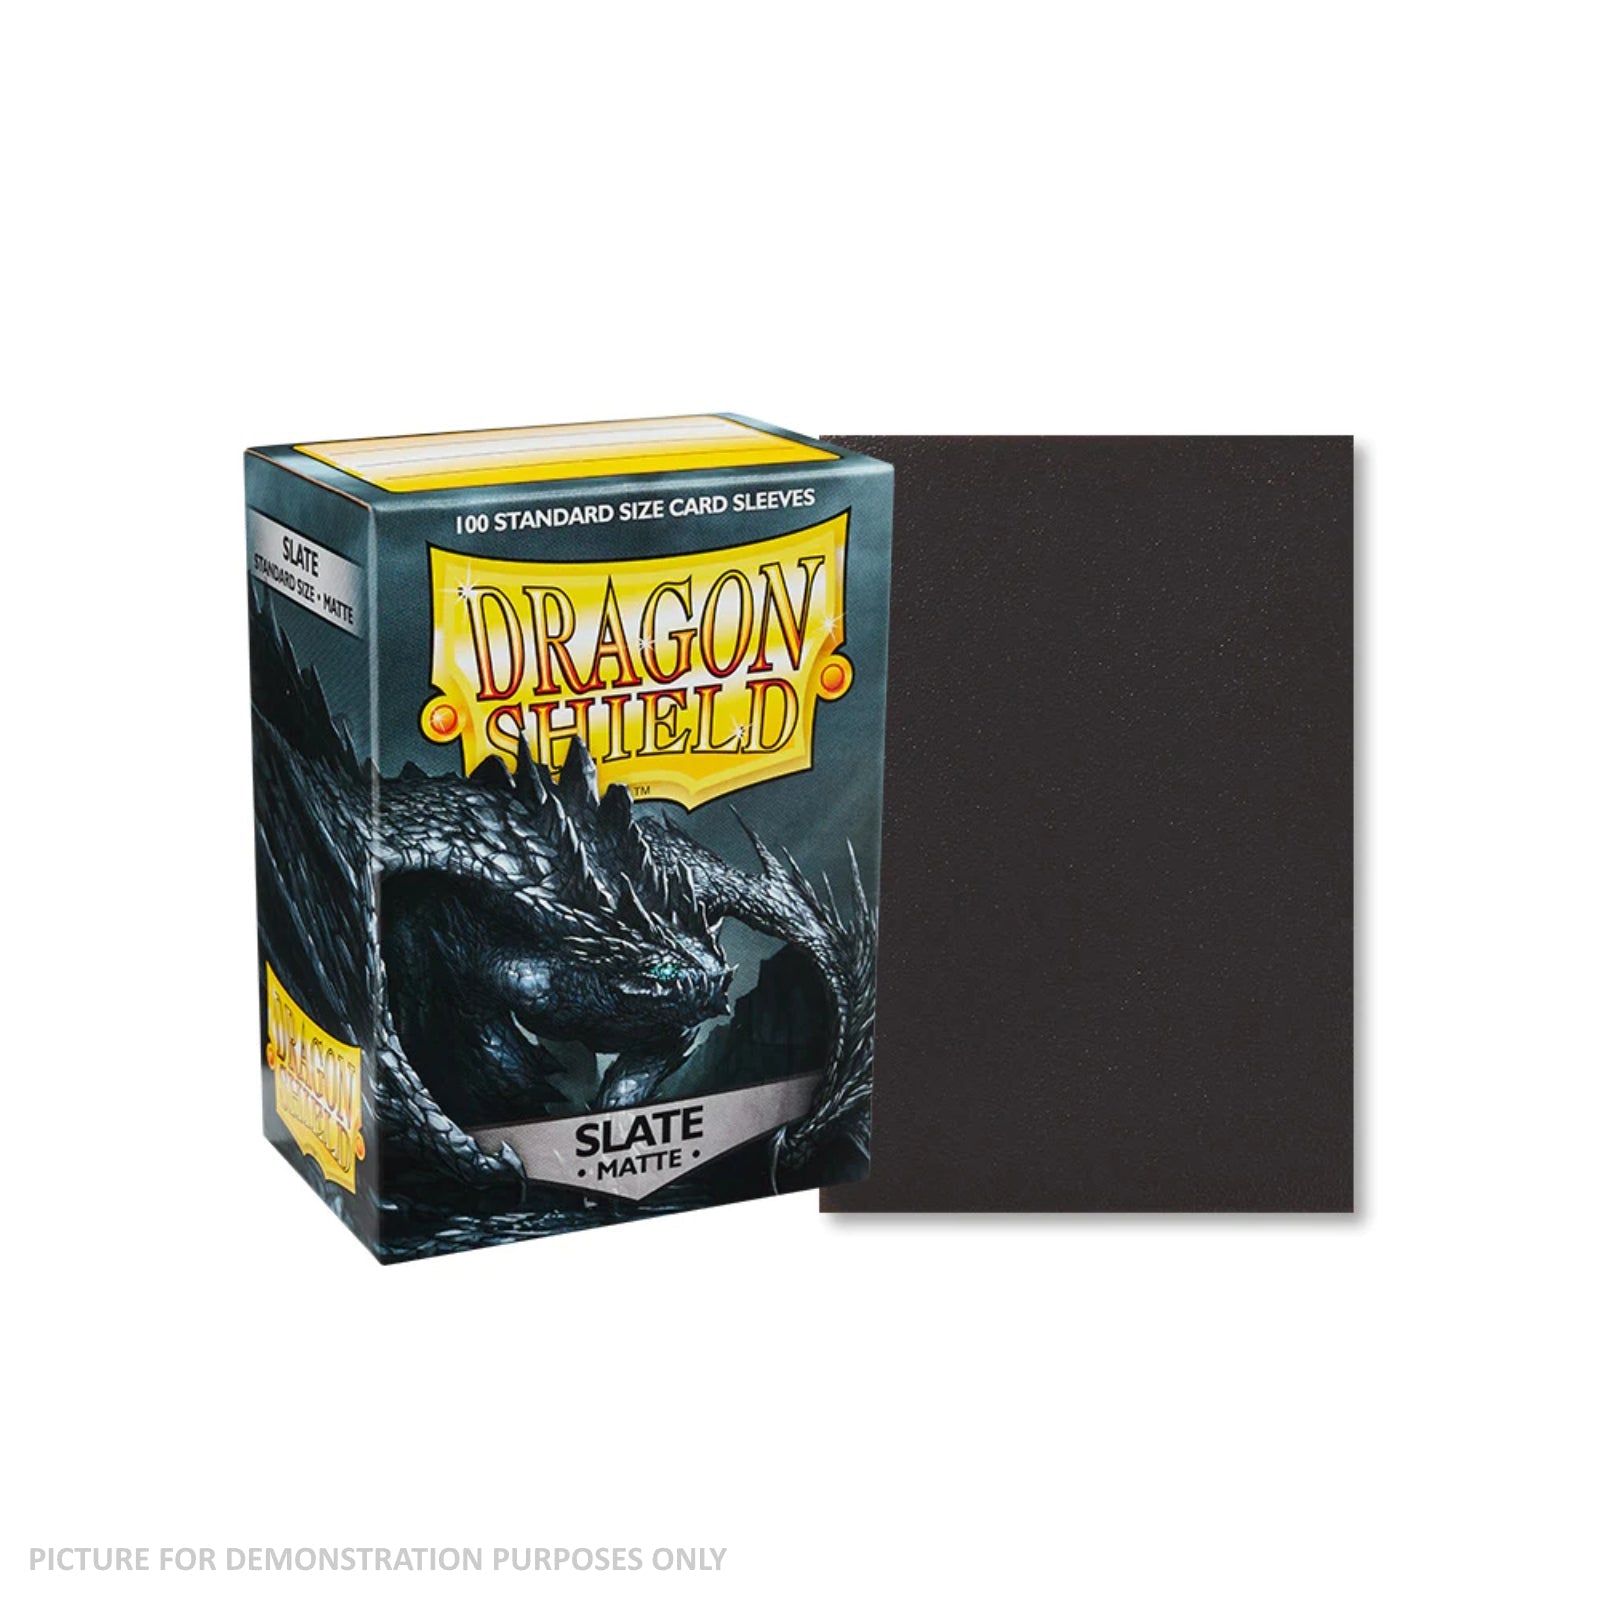 Dragon Shield 100 Standard Size Card Sleeves - Matte Slate